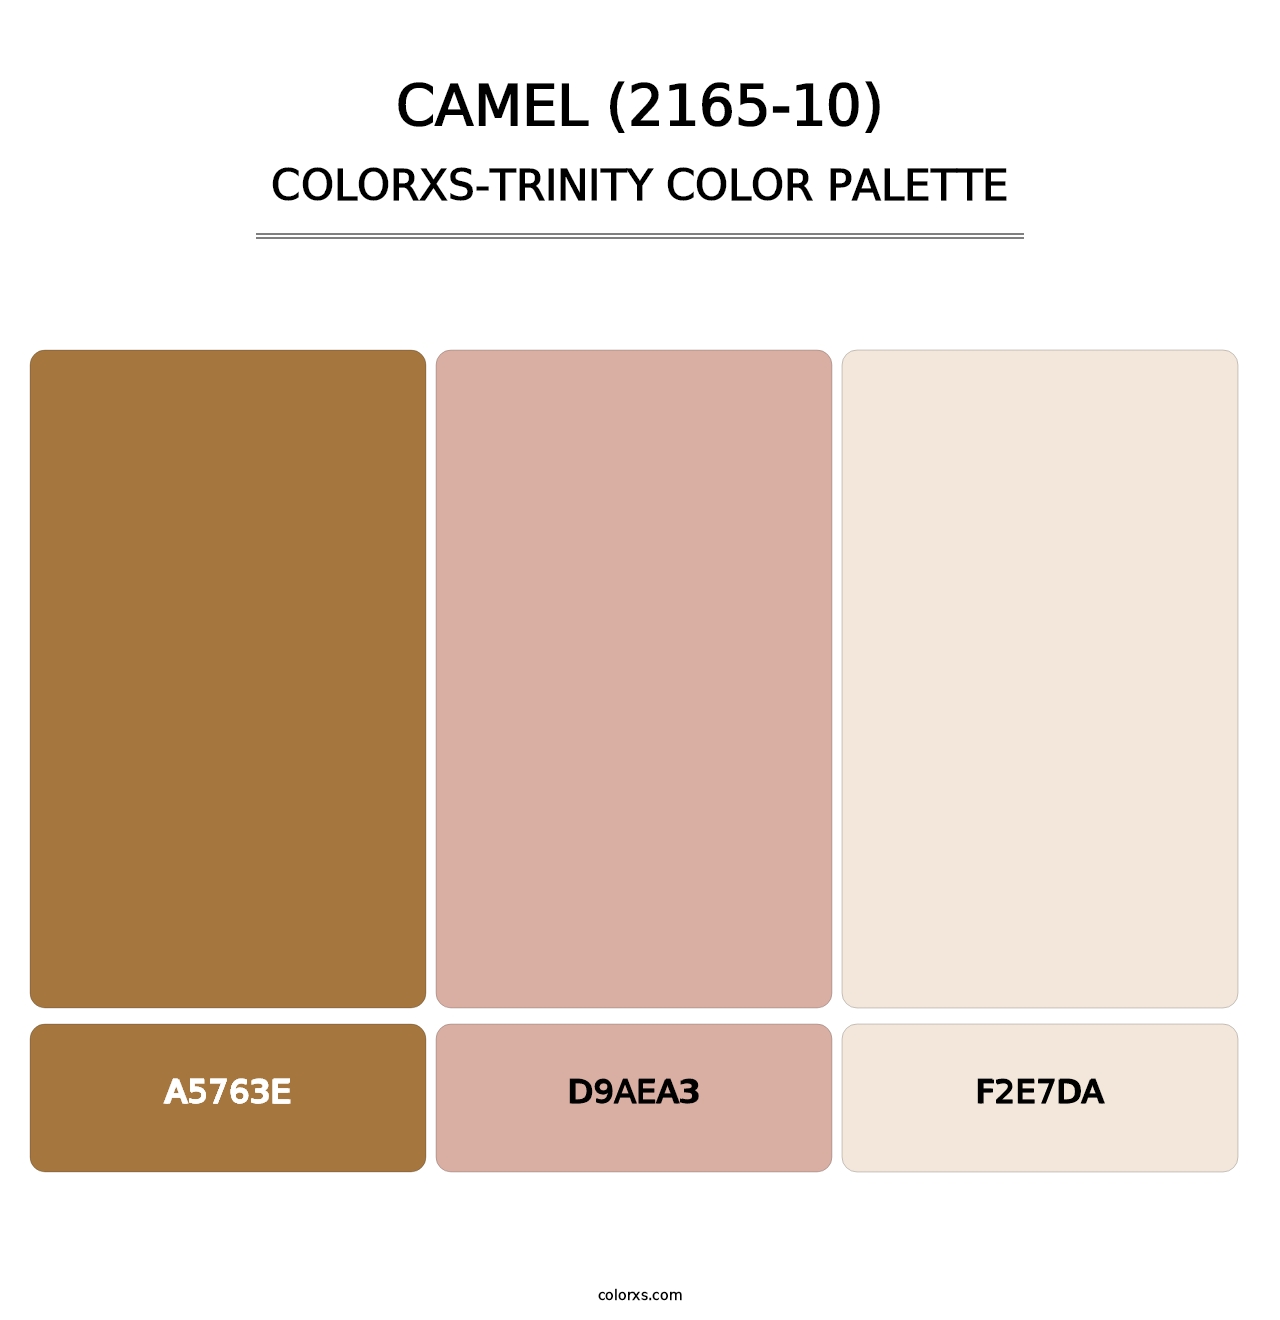 Camel (2165-10) - Colorxs Trinity Palette